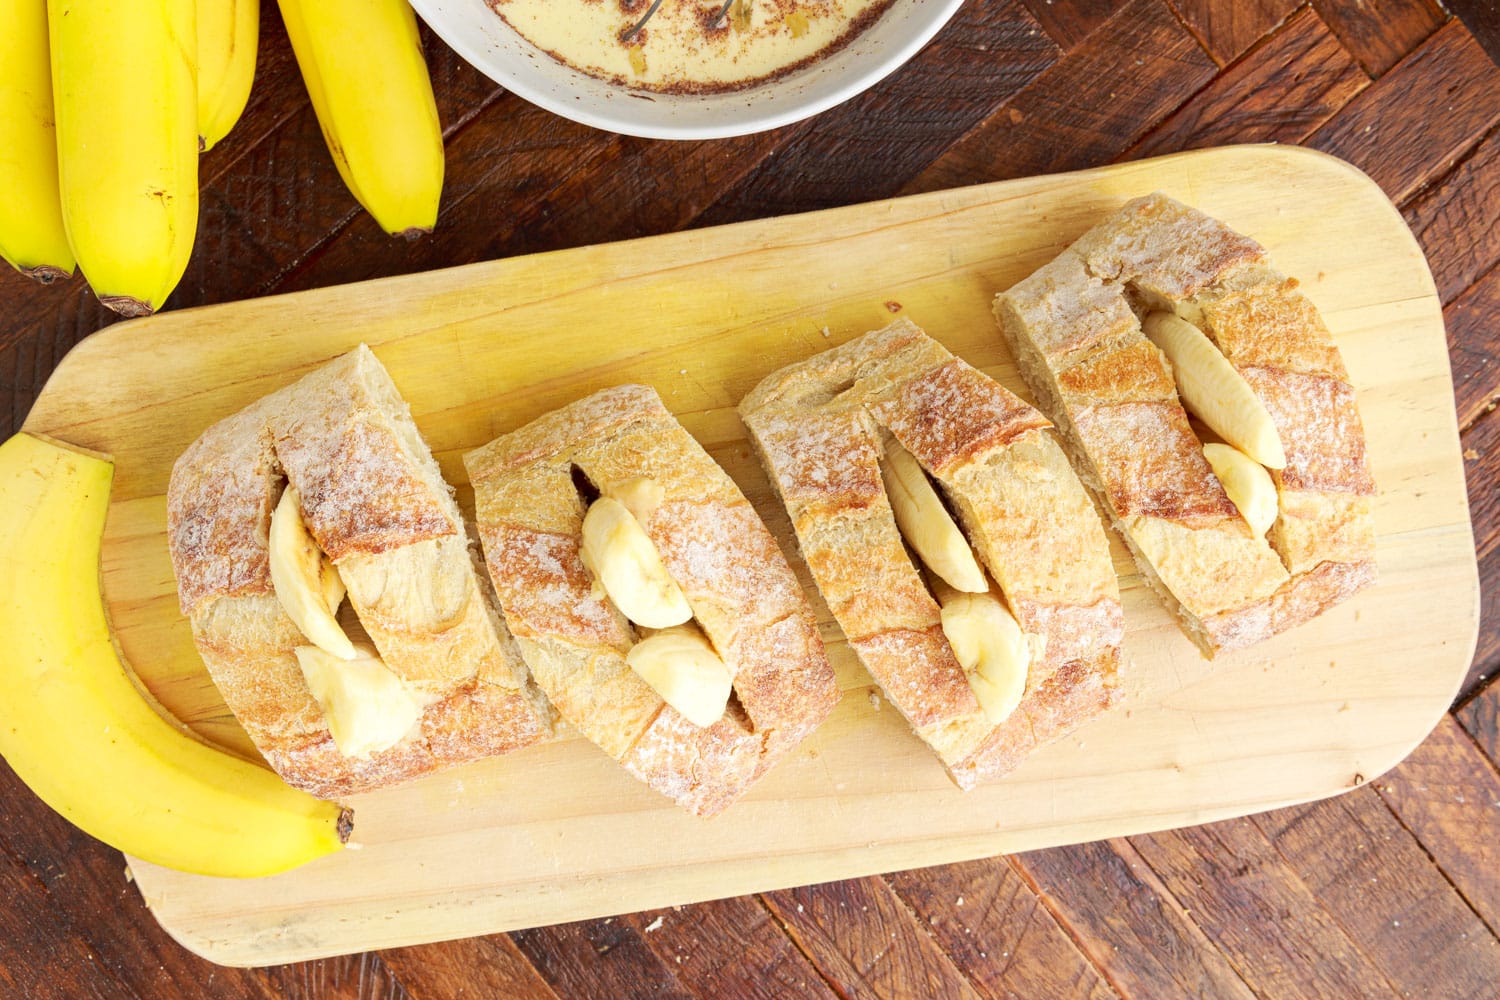 banana slices stuffed into top of toast